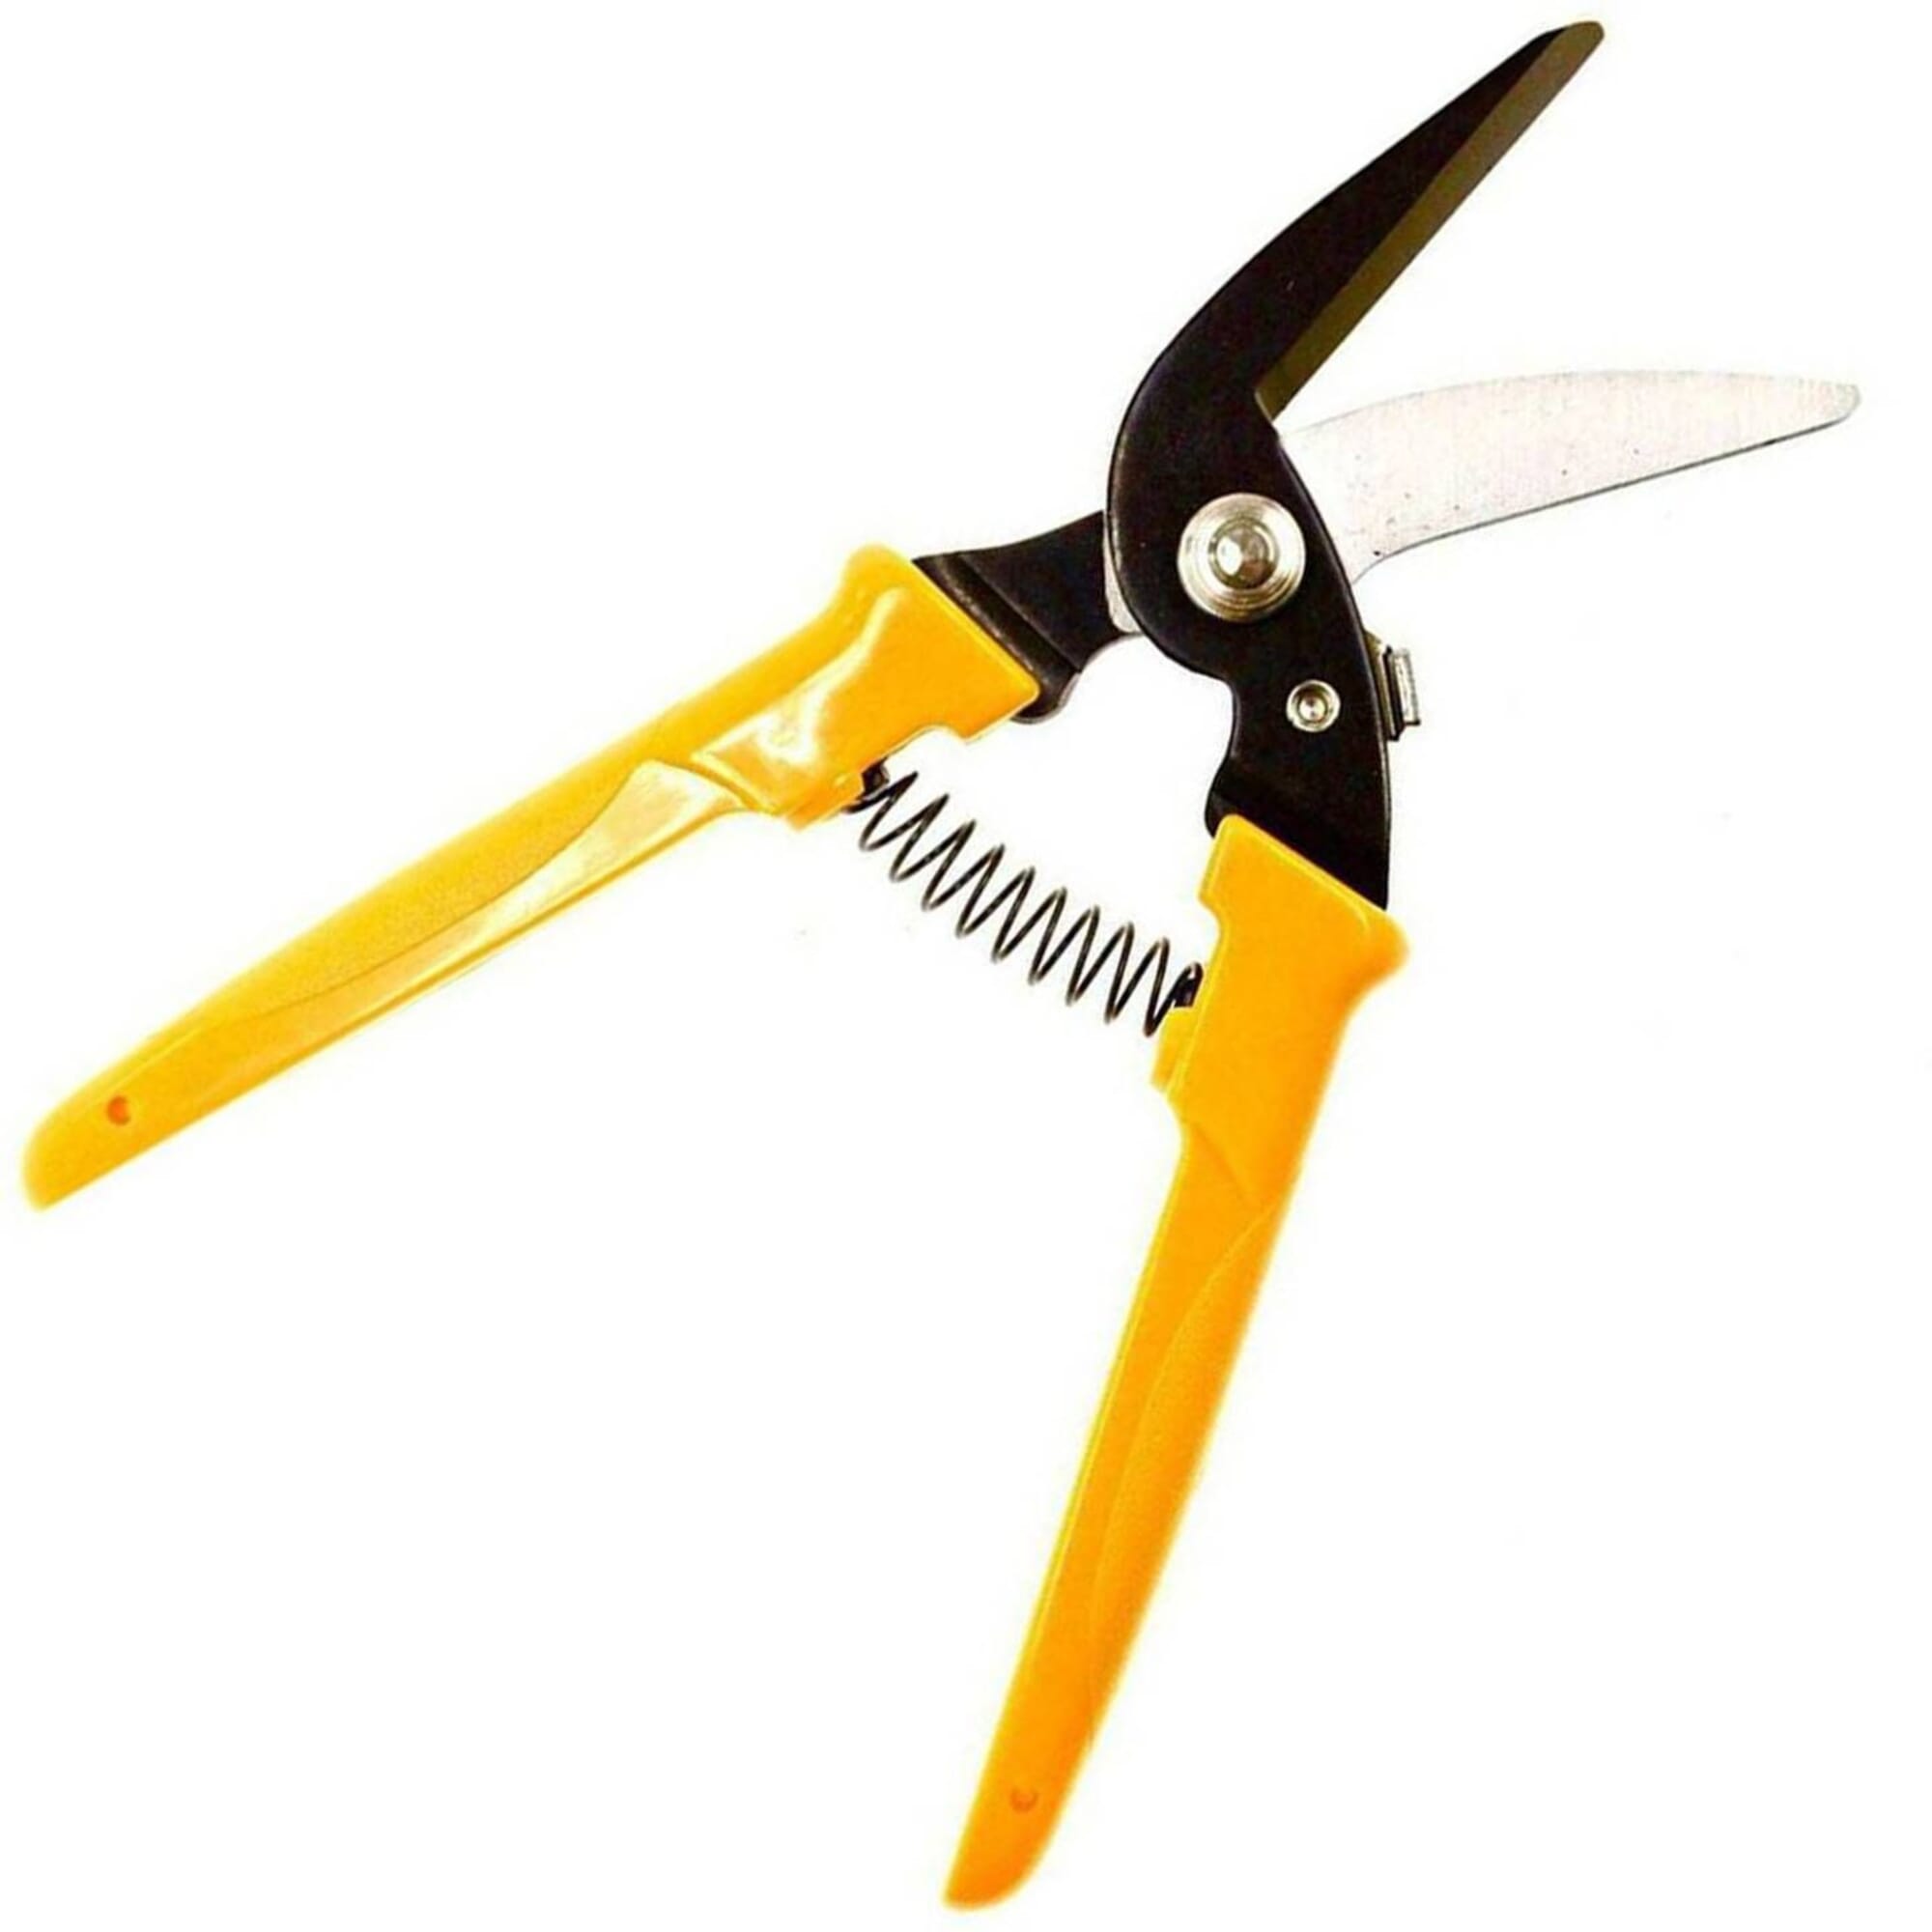 Allex Super Hard Scissors SH-1 Stainless Steel General Purpose Utility  Shears 55mm, to Cut Cardboard, Leather, Resin Sheet, & Carton